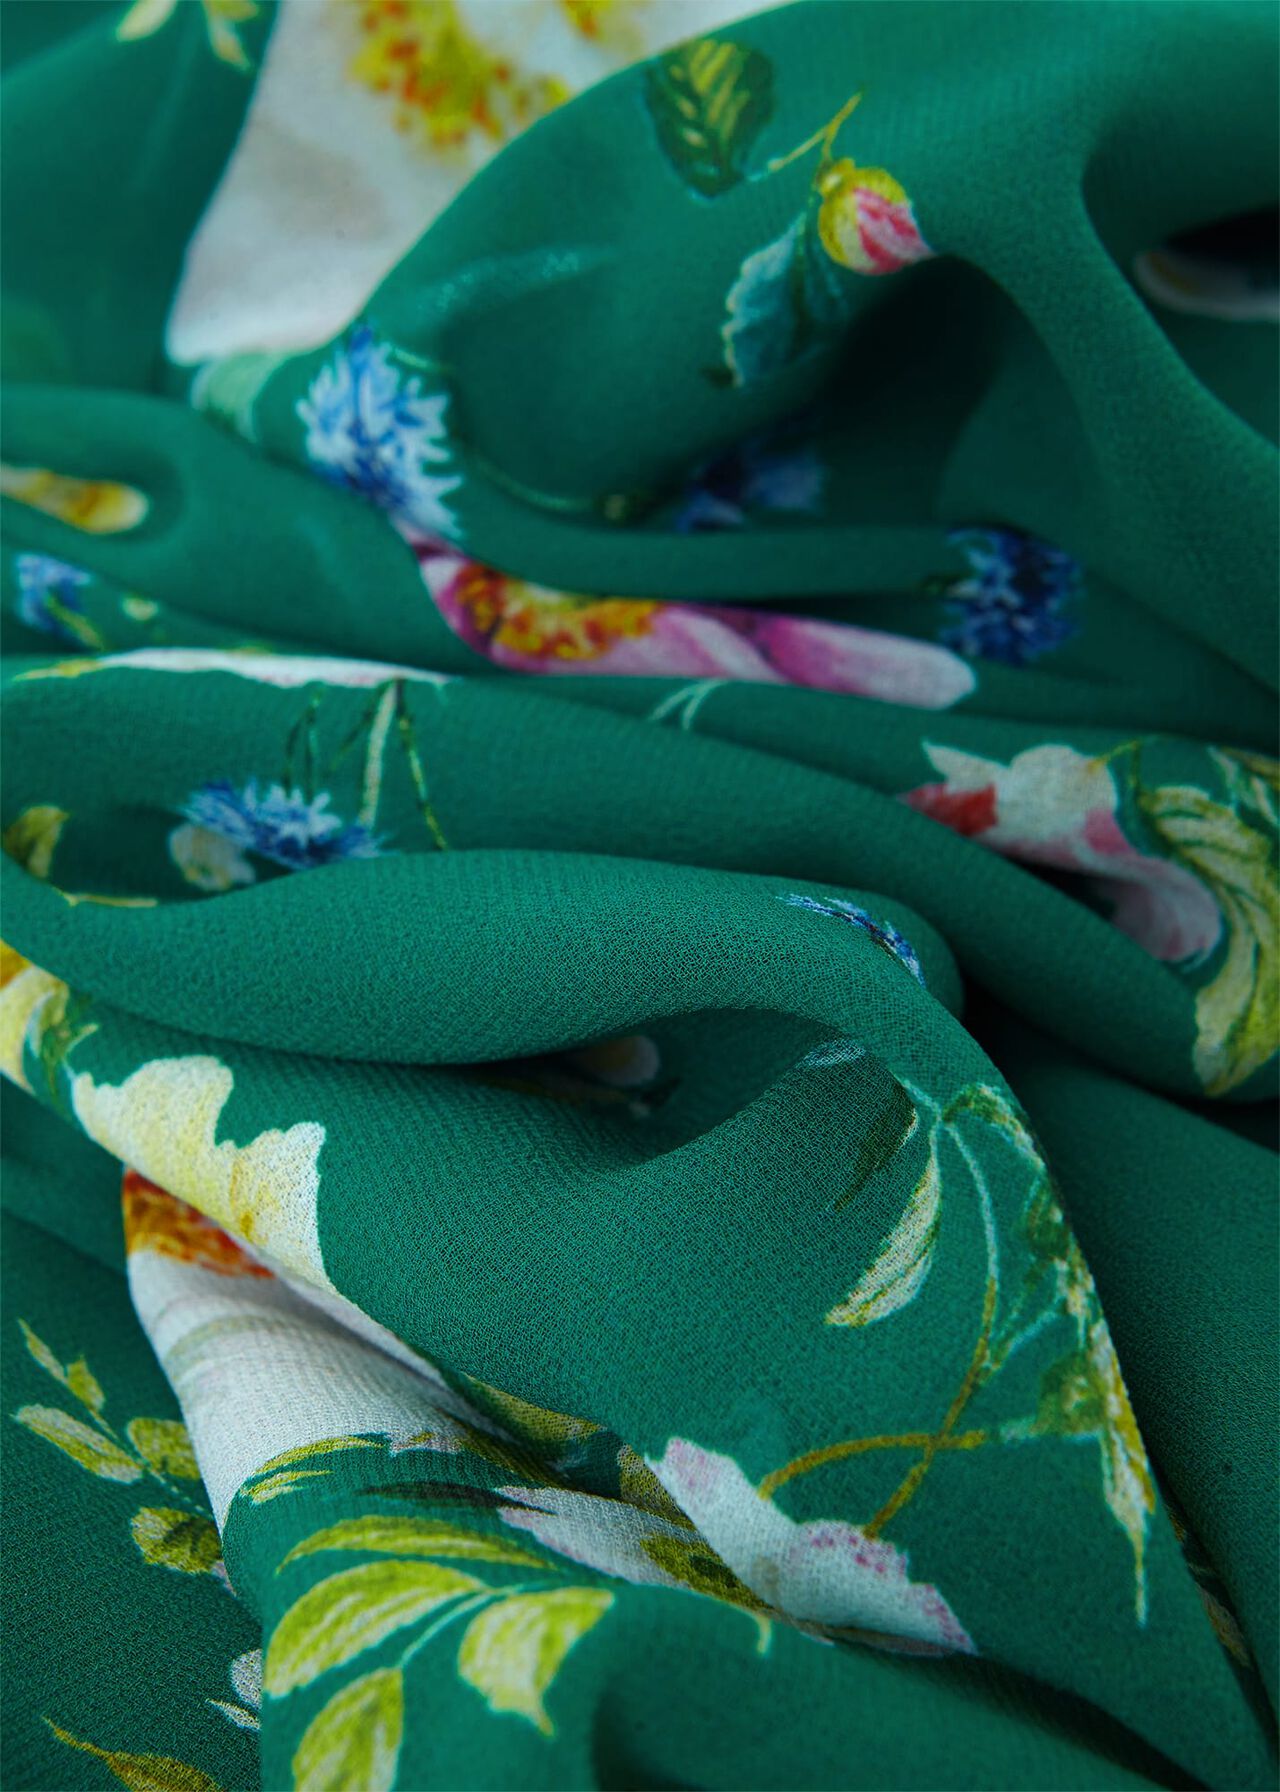 Carly Floral Midi Dress, Green Multi, hi-res